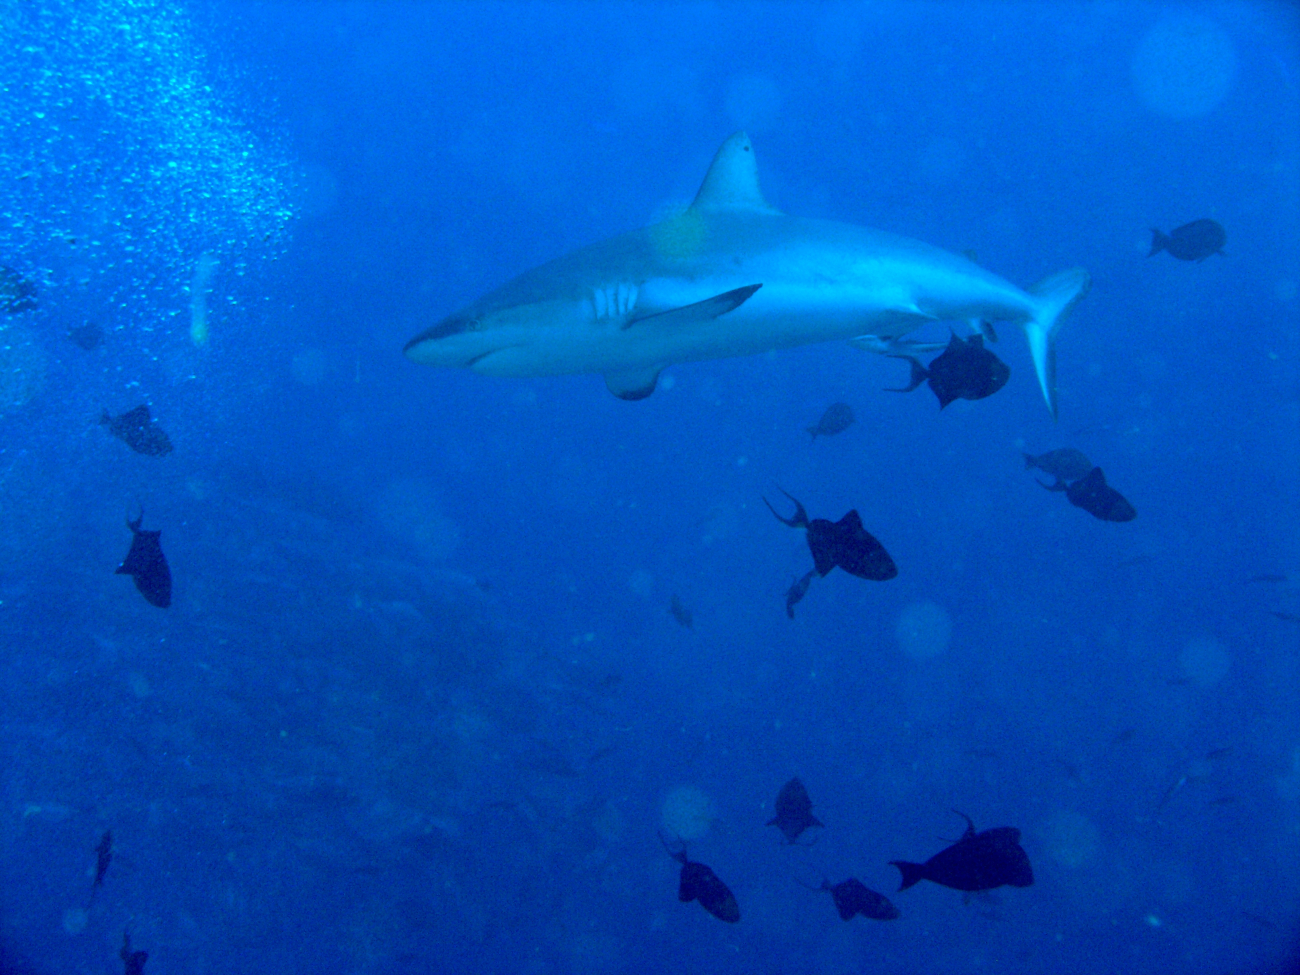 Galapagos shark cruising through a school of triggerfish